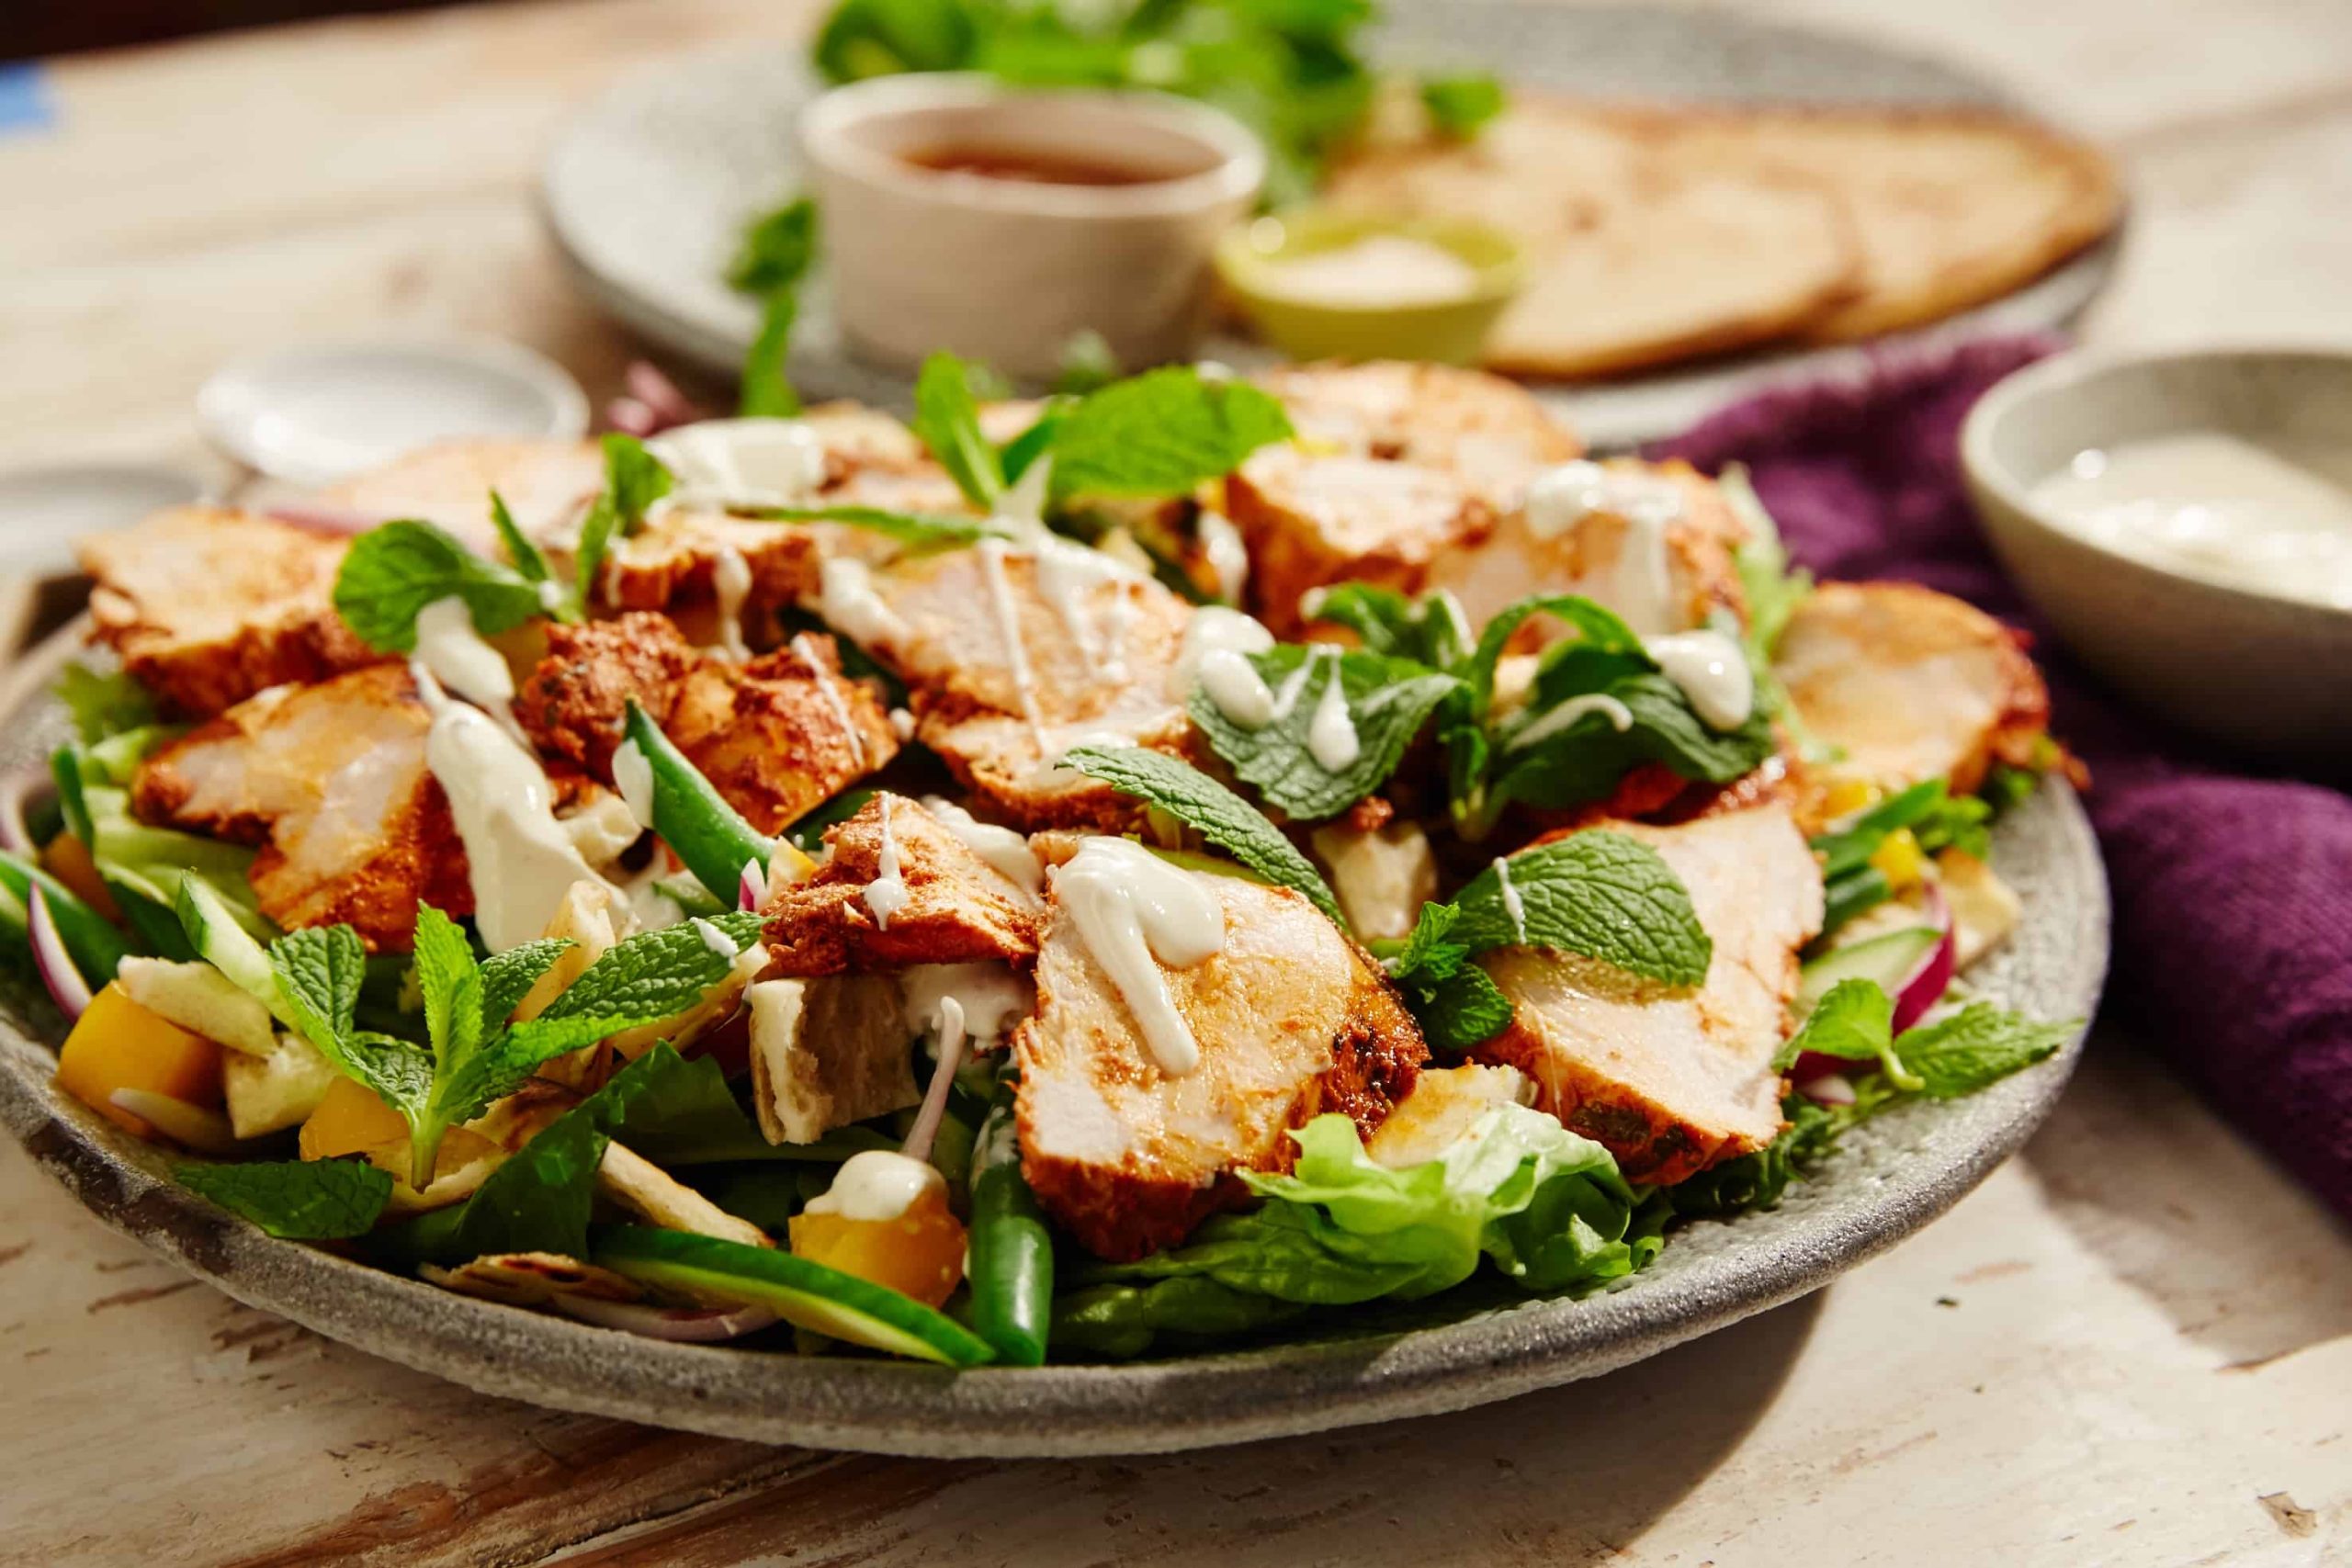 Tandoori Chicken Salad - Delicious and full of flavour